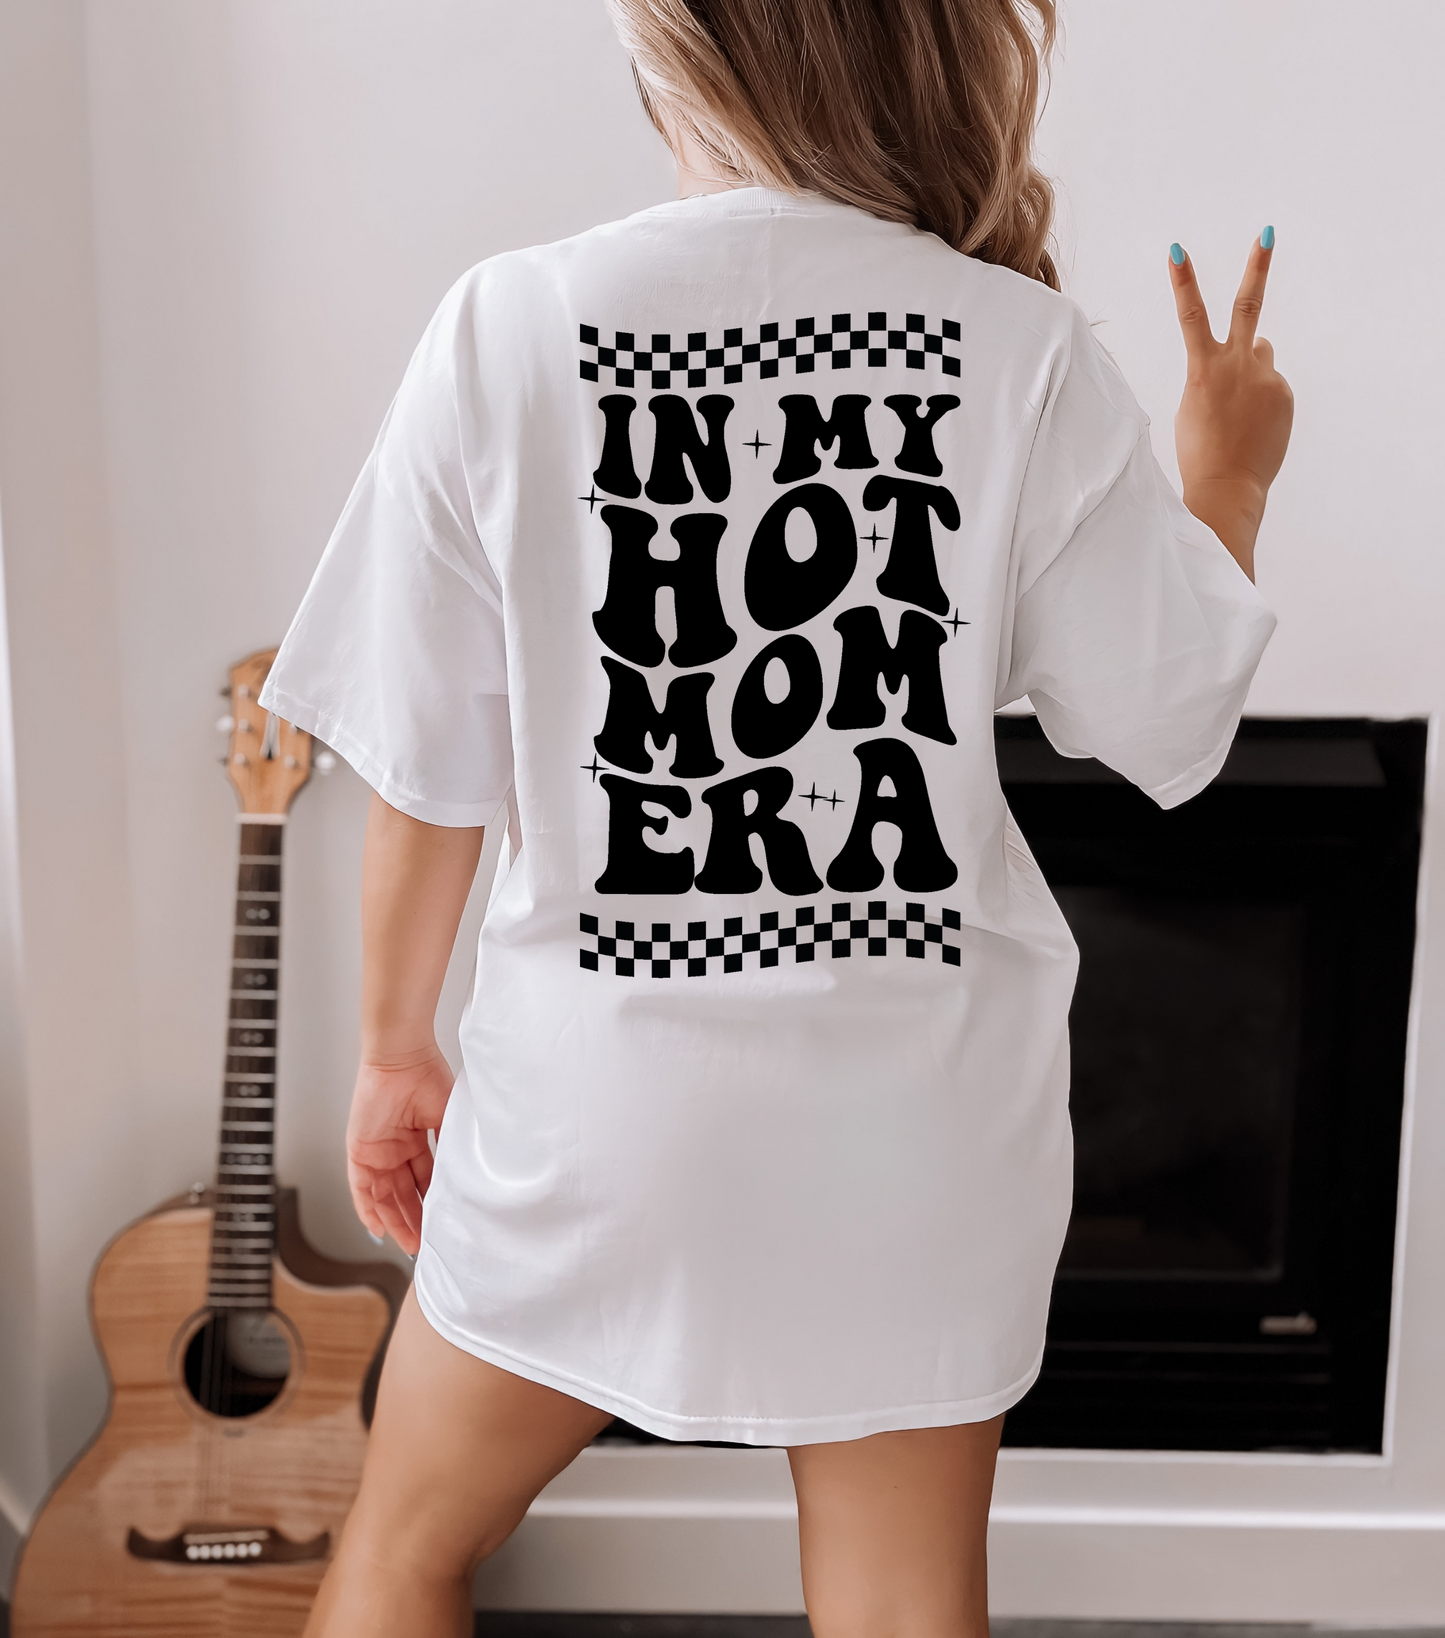 In My Hot Mama Era (front & back) - Unisex T-shirt